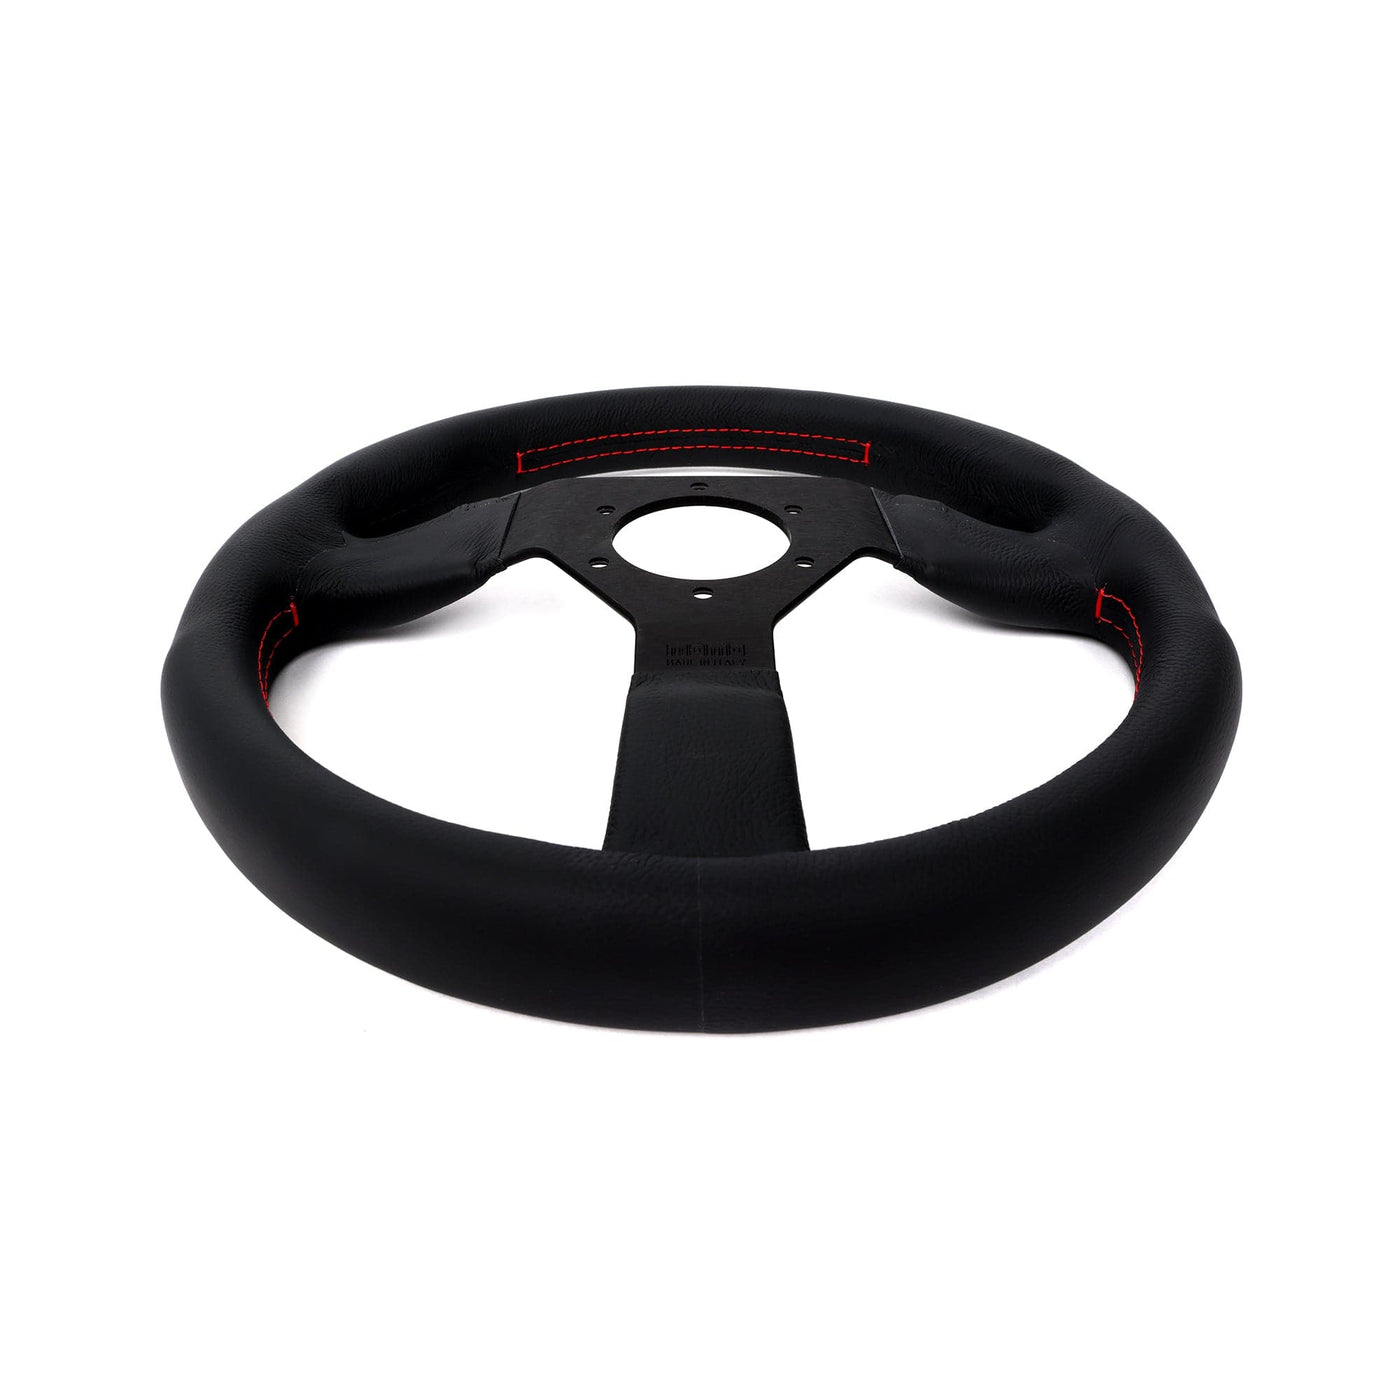 Momo Motorsports Steering Wheels Momo Montecarlo Leather Steering Wheel 320 mm - Black/Red Stitch/Black Spokes